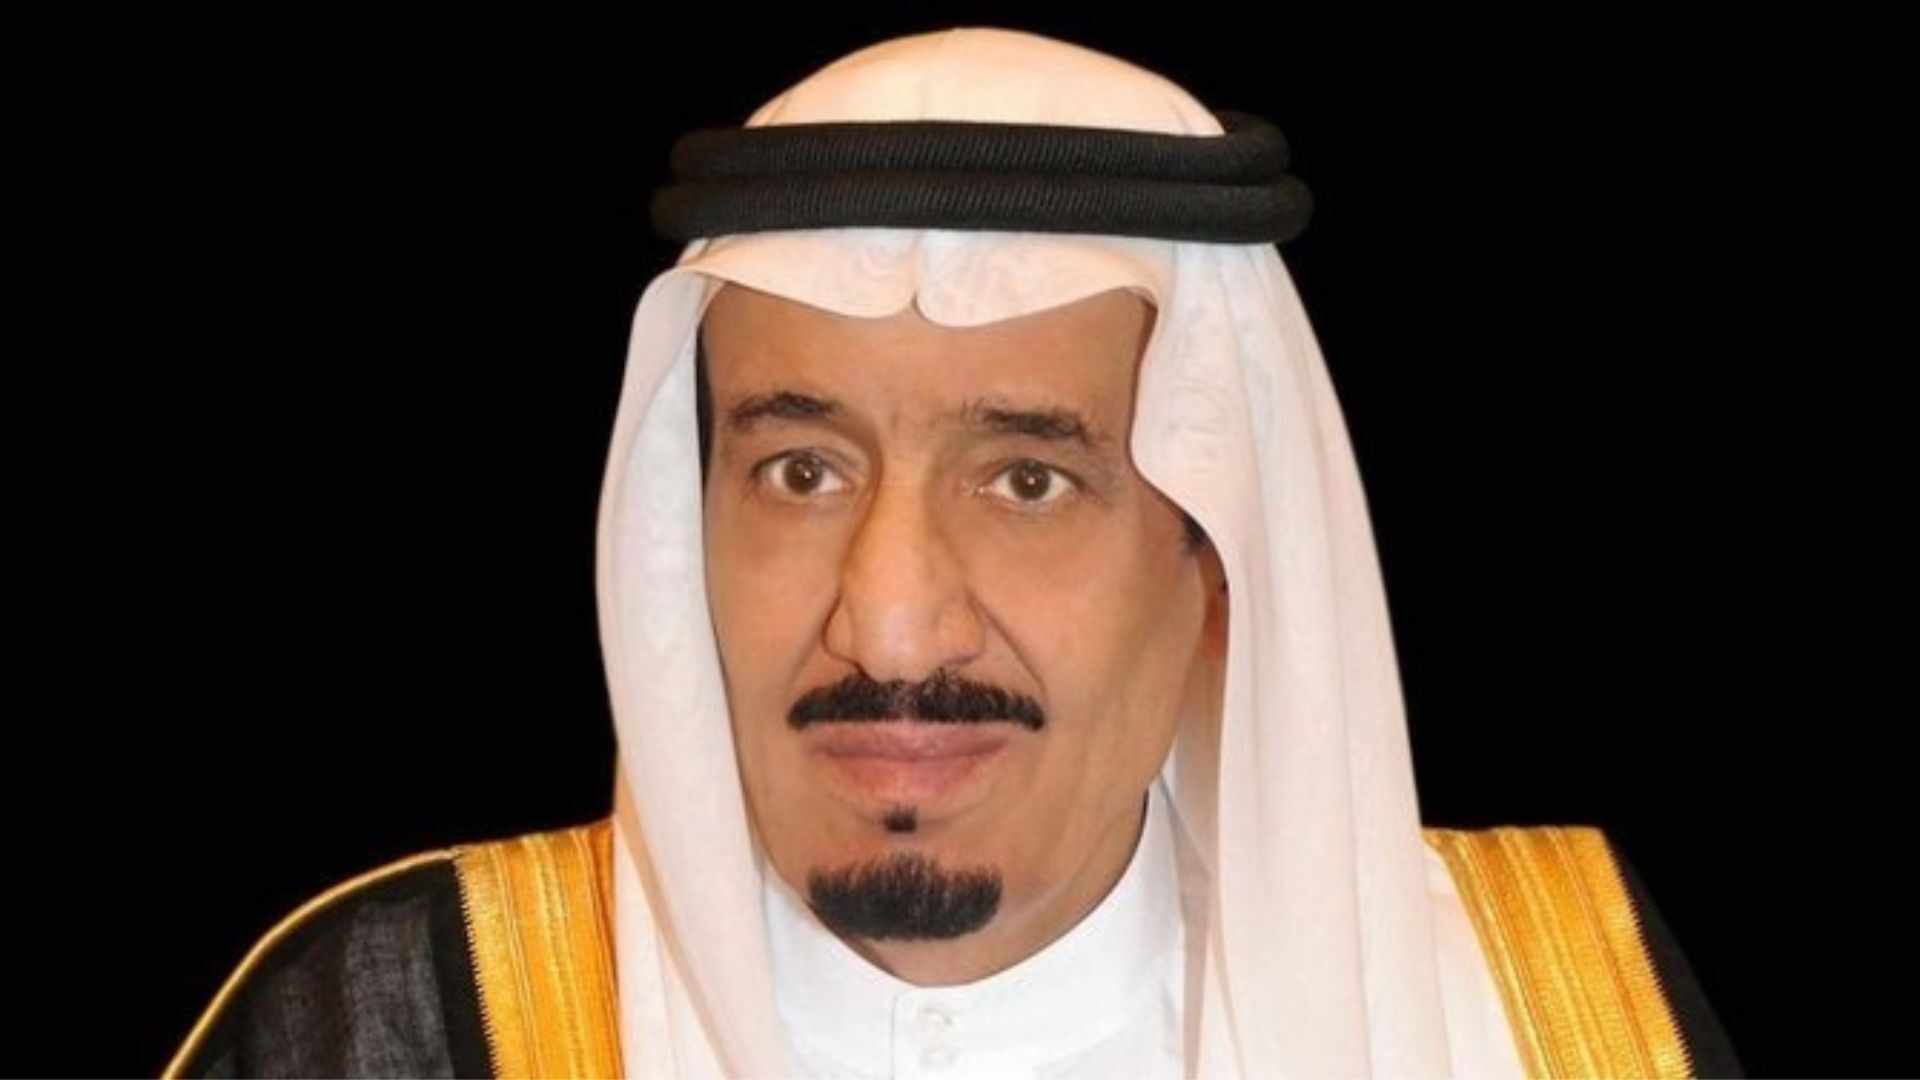 King Salman bin Abdulaziz Al-Saud of Saudi Arabia